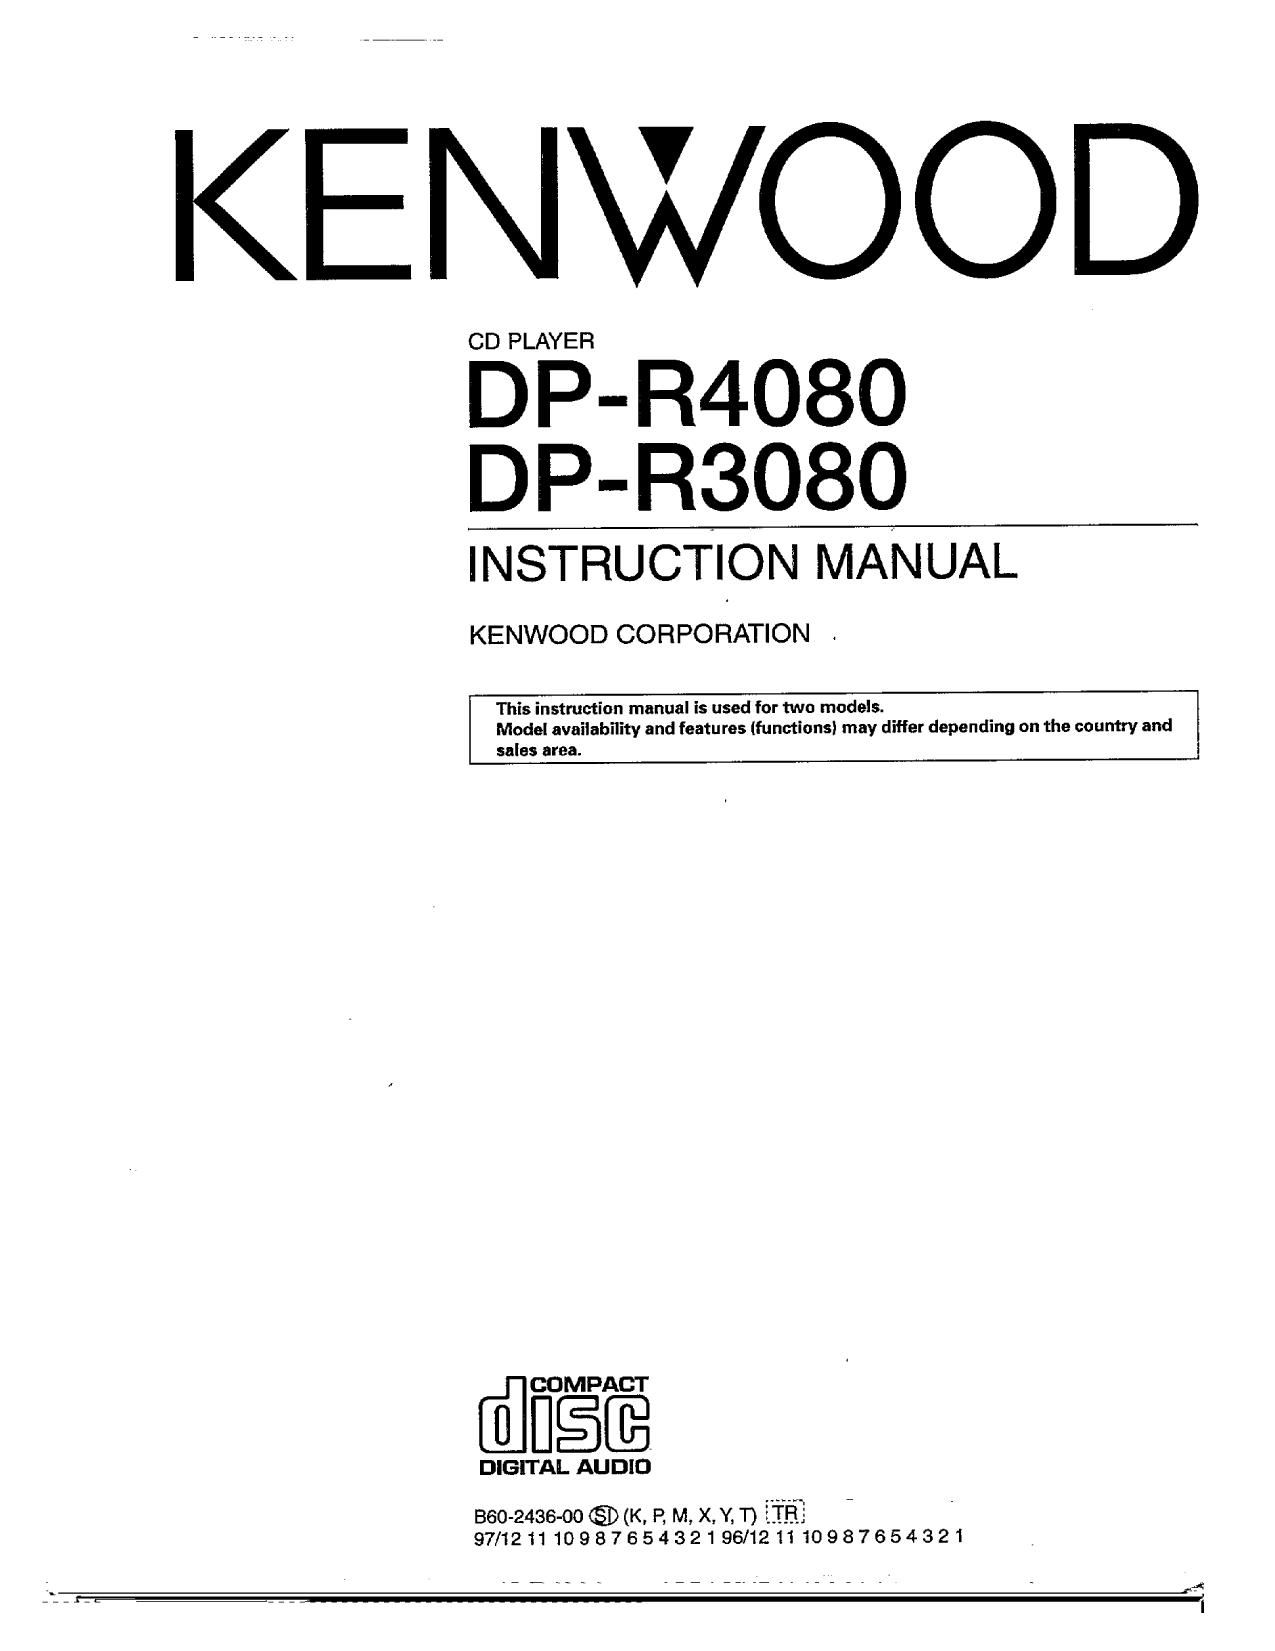 Kenwood DPR 4080 Owners Manual